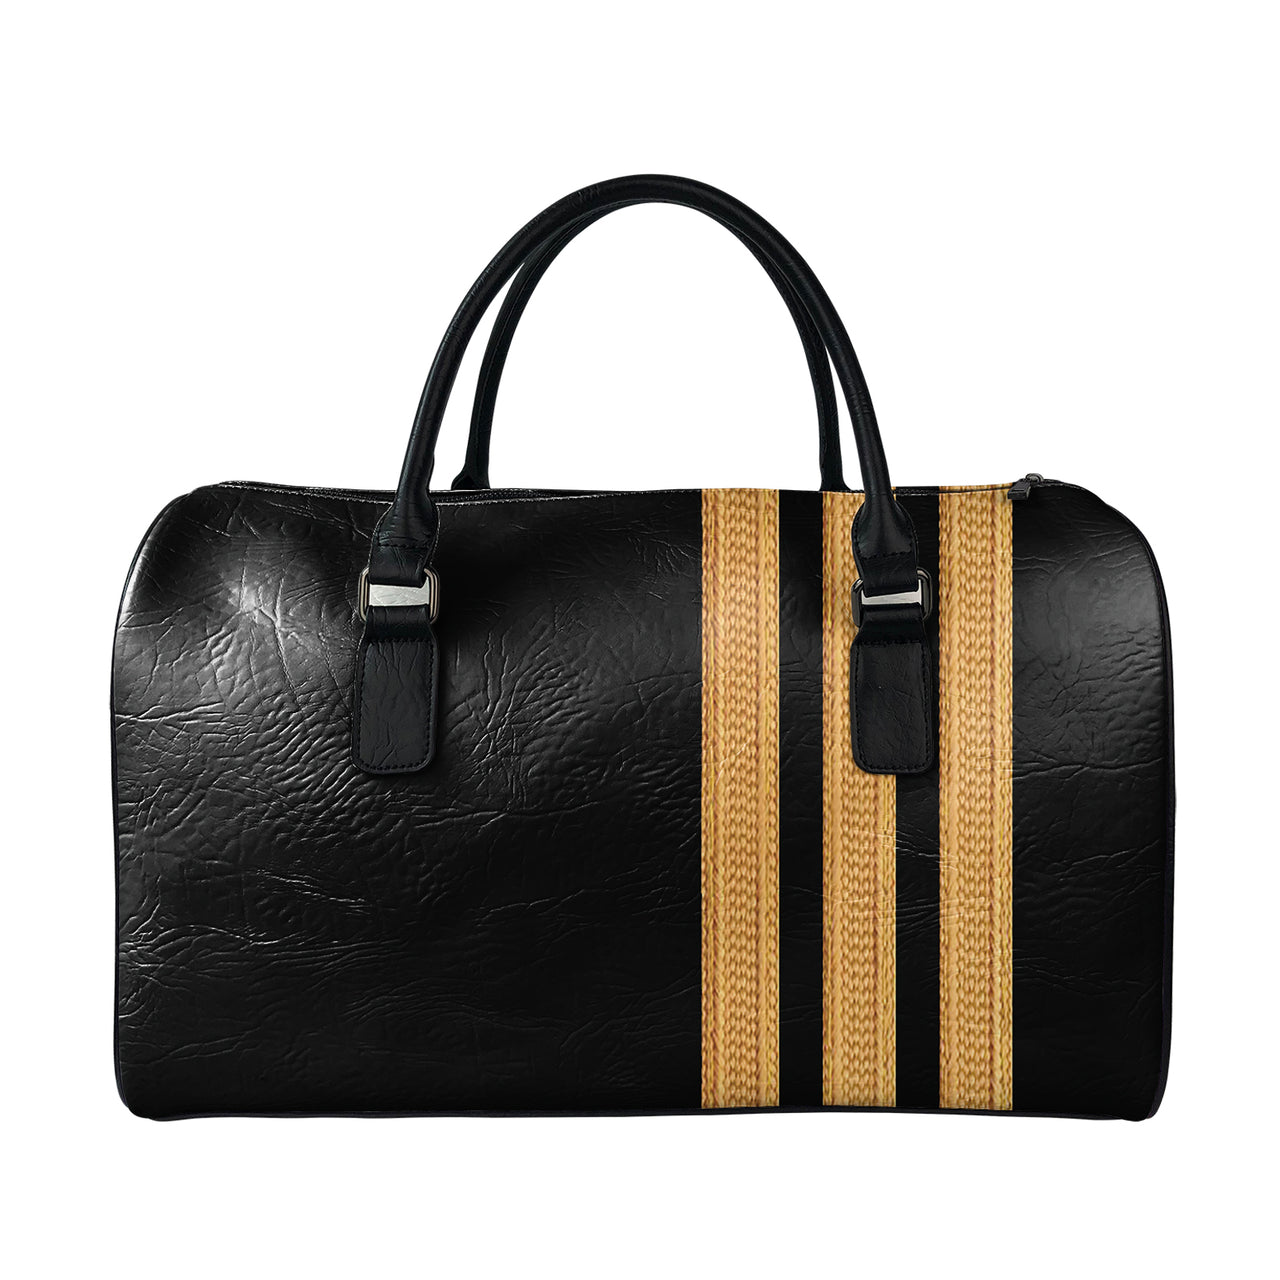 Special Golden Epaulettes (4,3,2 Lines) Designed Leather Travel Bag